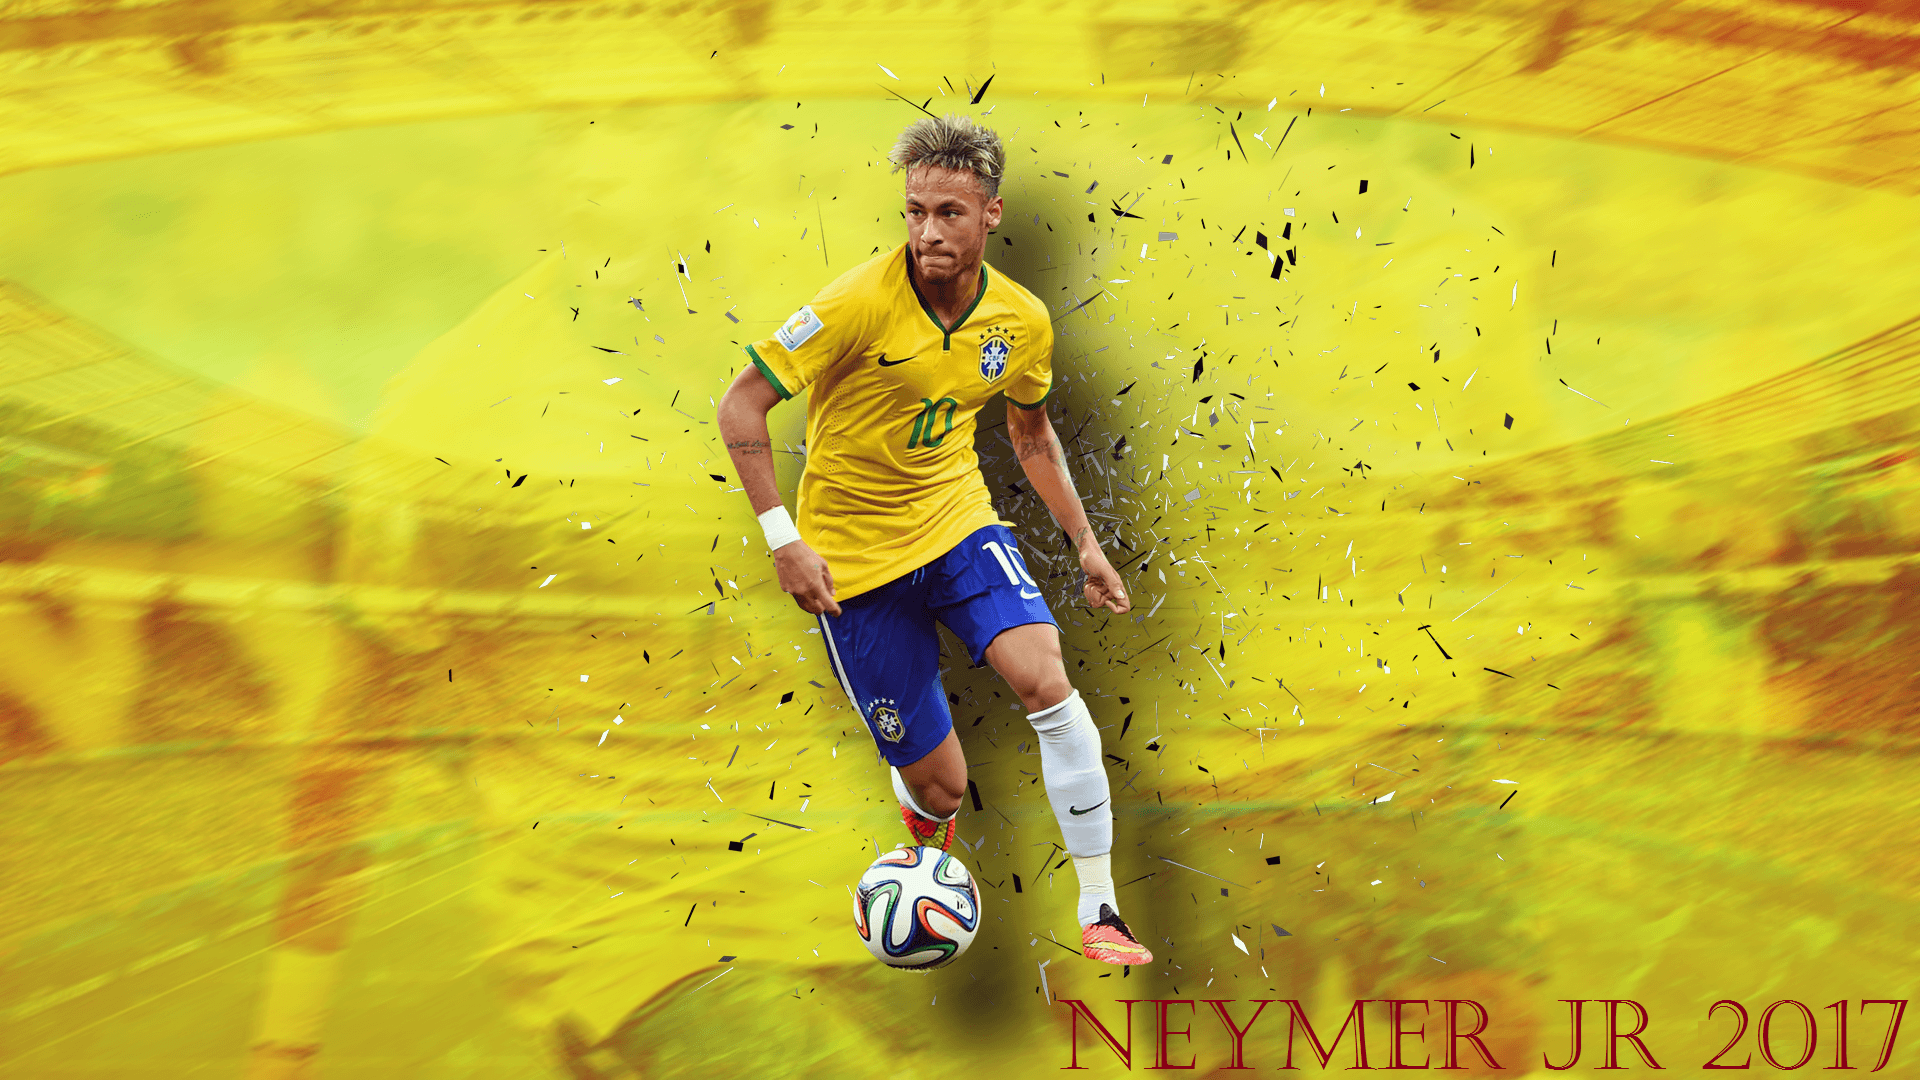 Neymar Wallpaper 2017- HD Photo Free Download